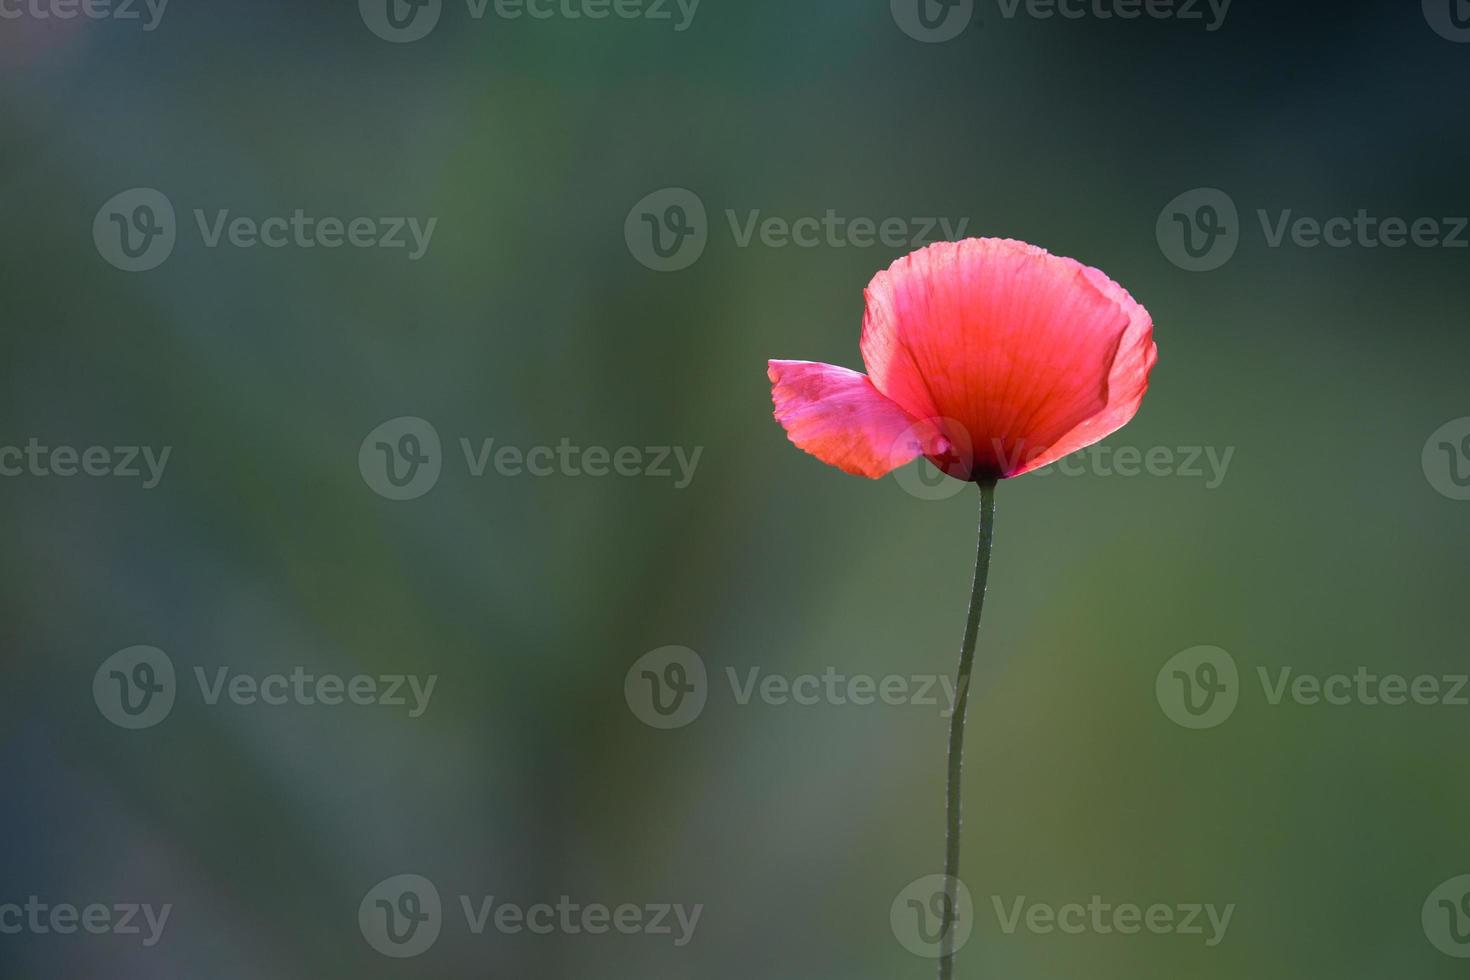 flor de amapola roja foto